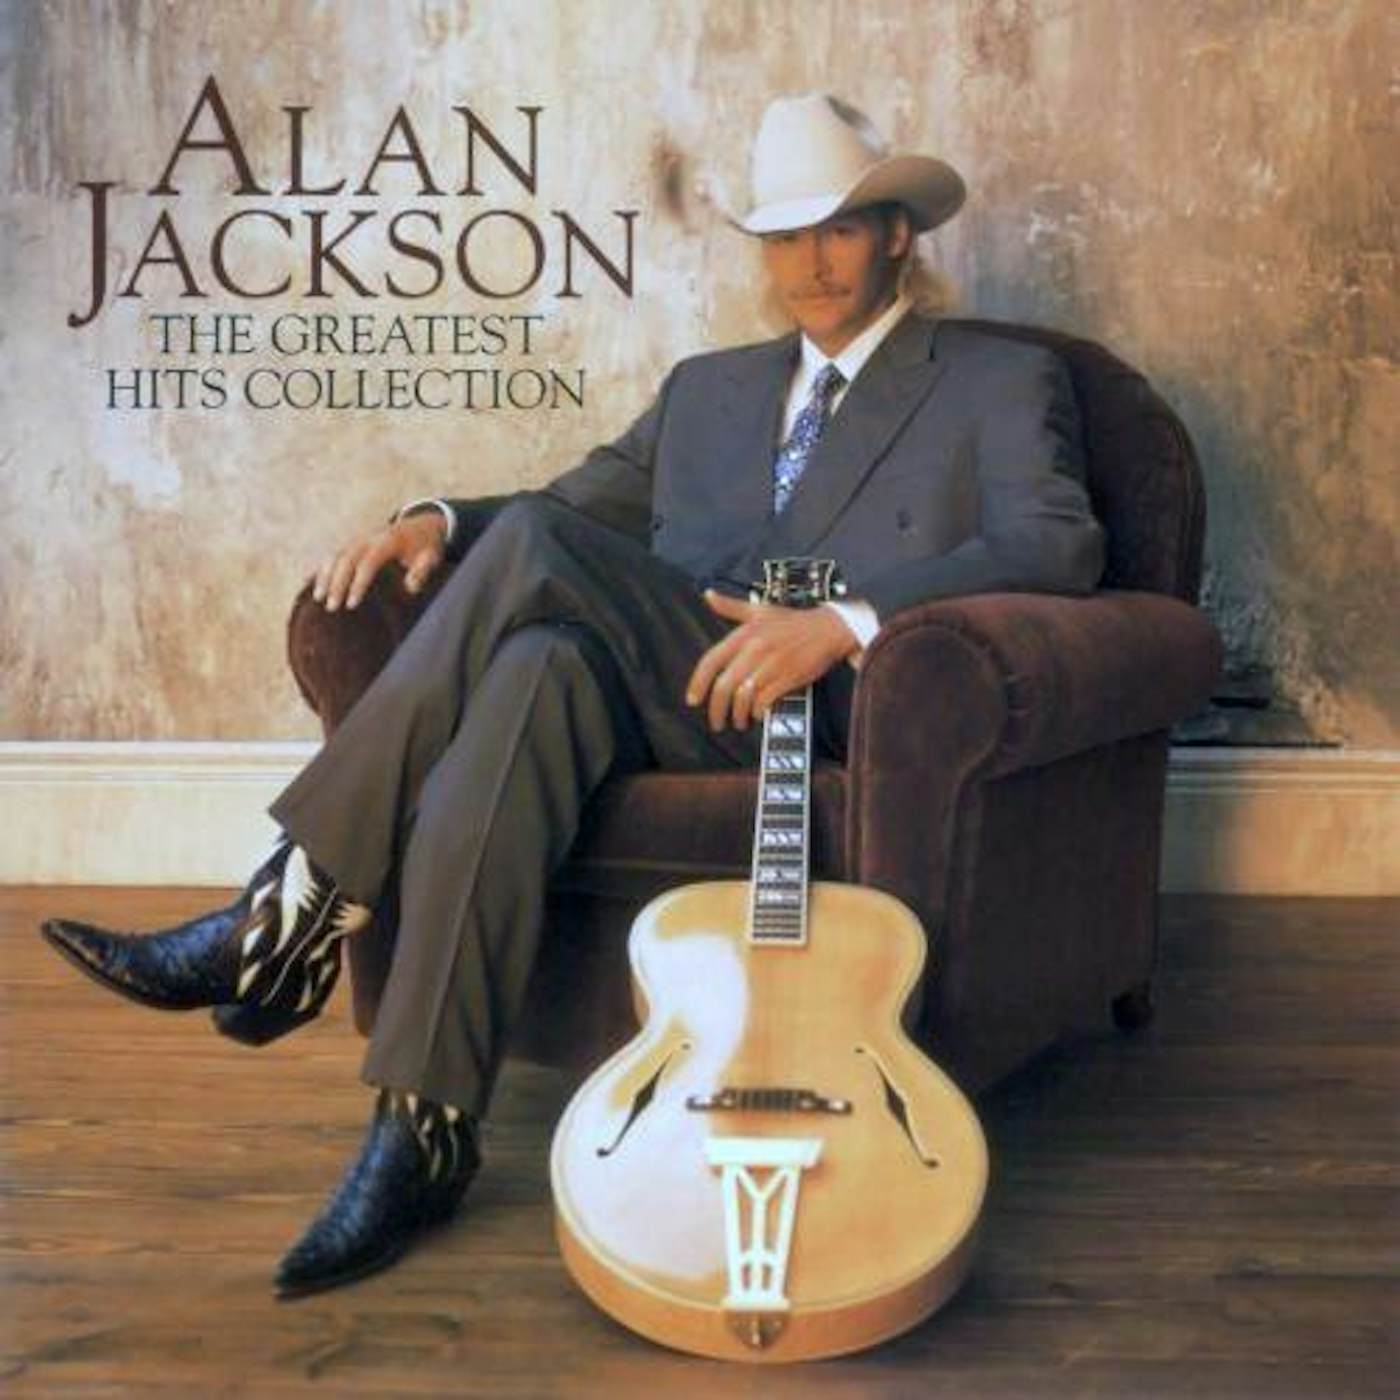 Alan Jackson GREATEST HITS COLLECTION CD